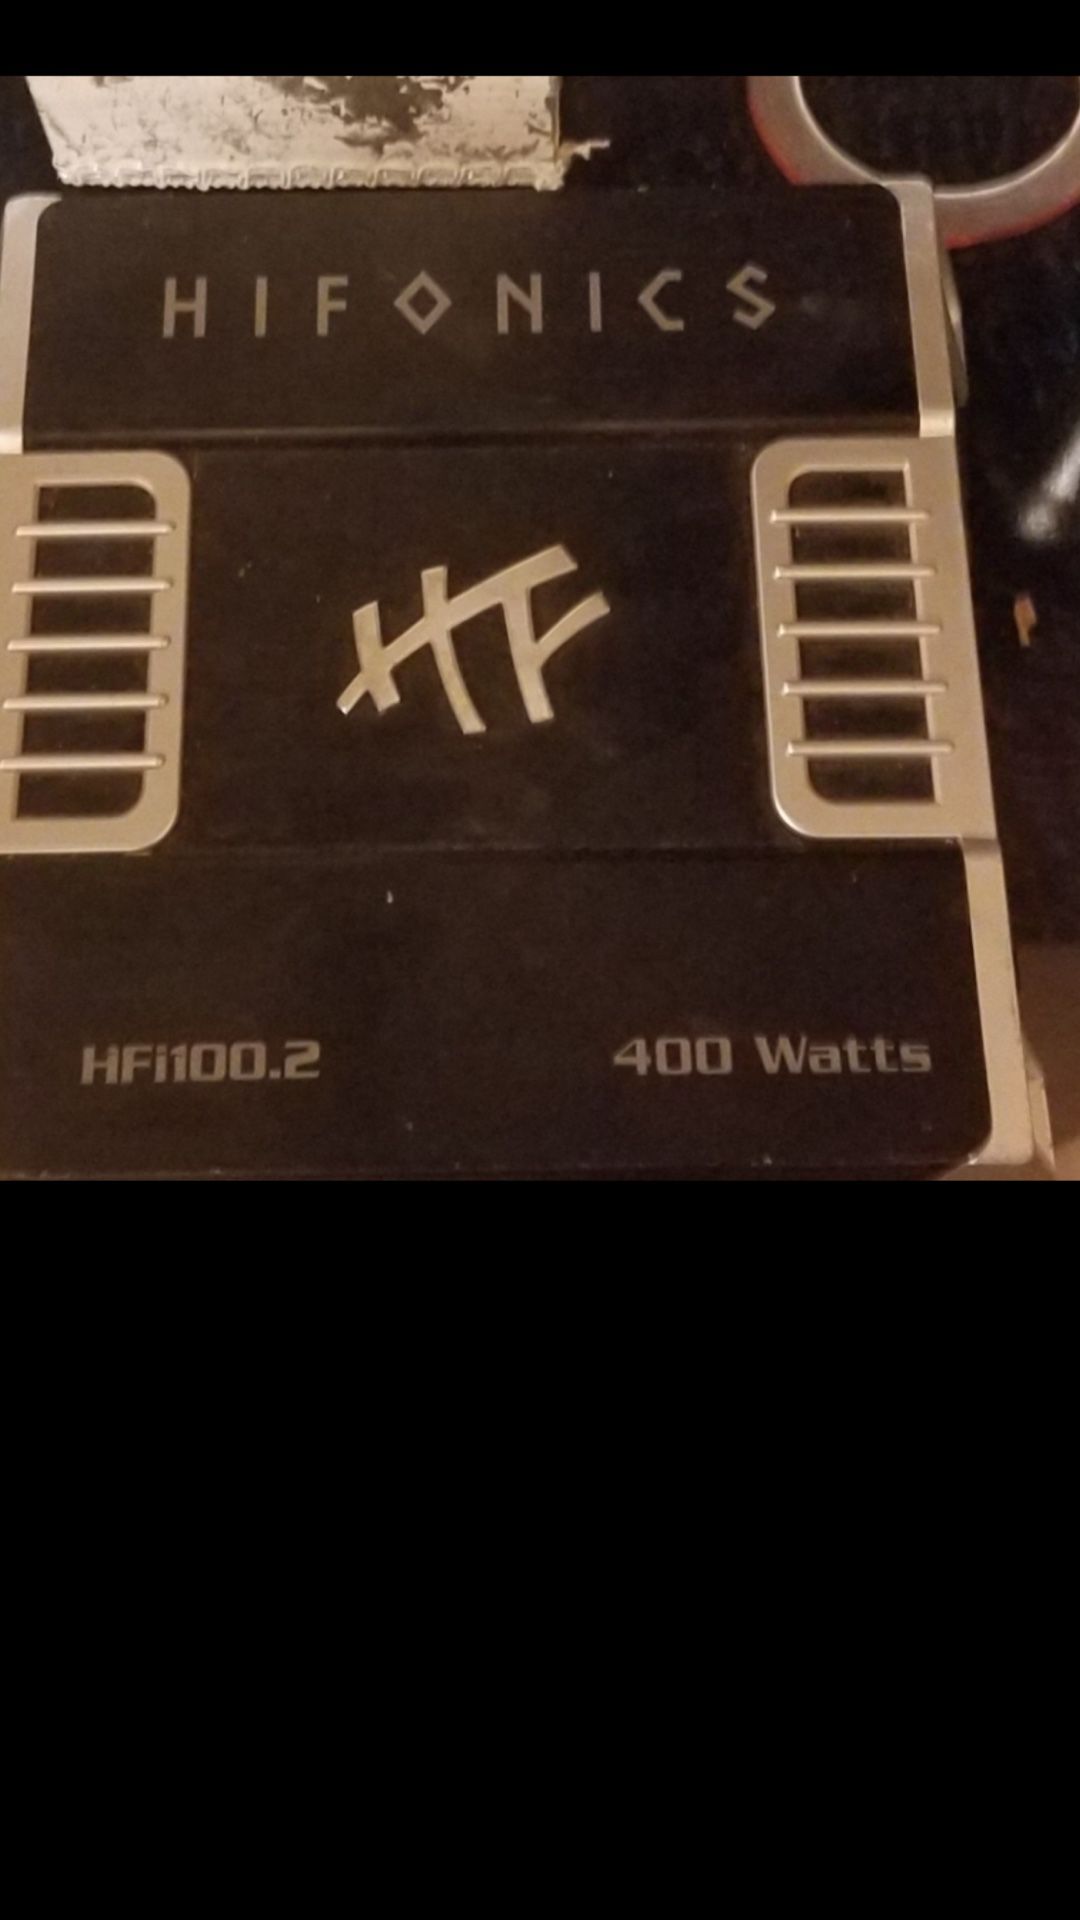 Hifonics amplifier $100